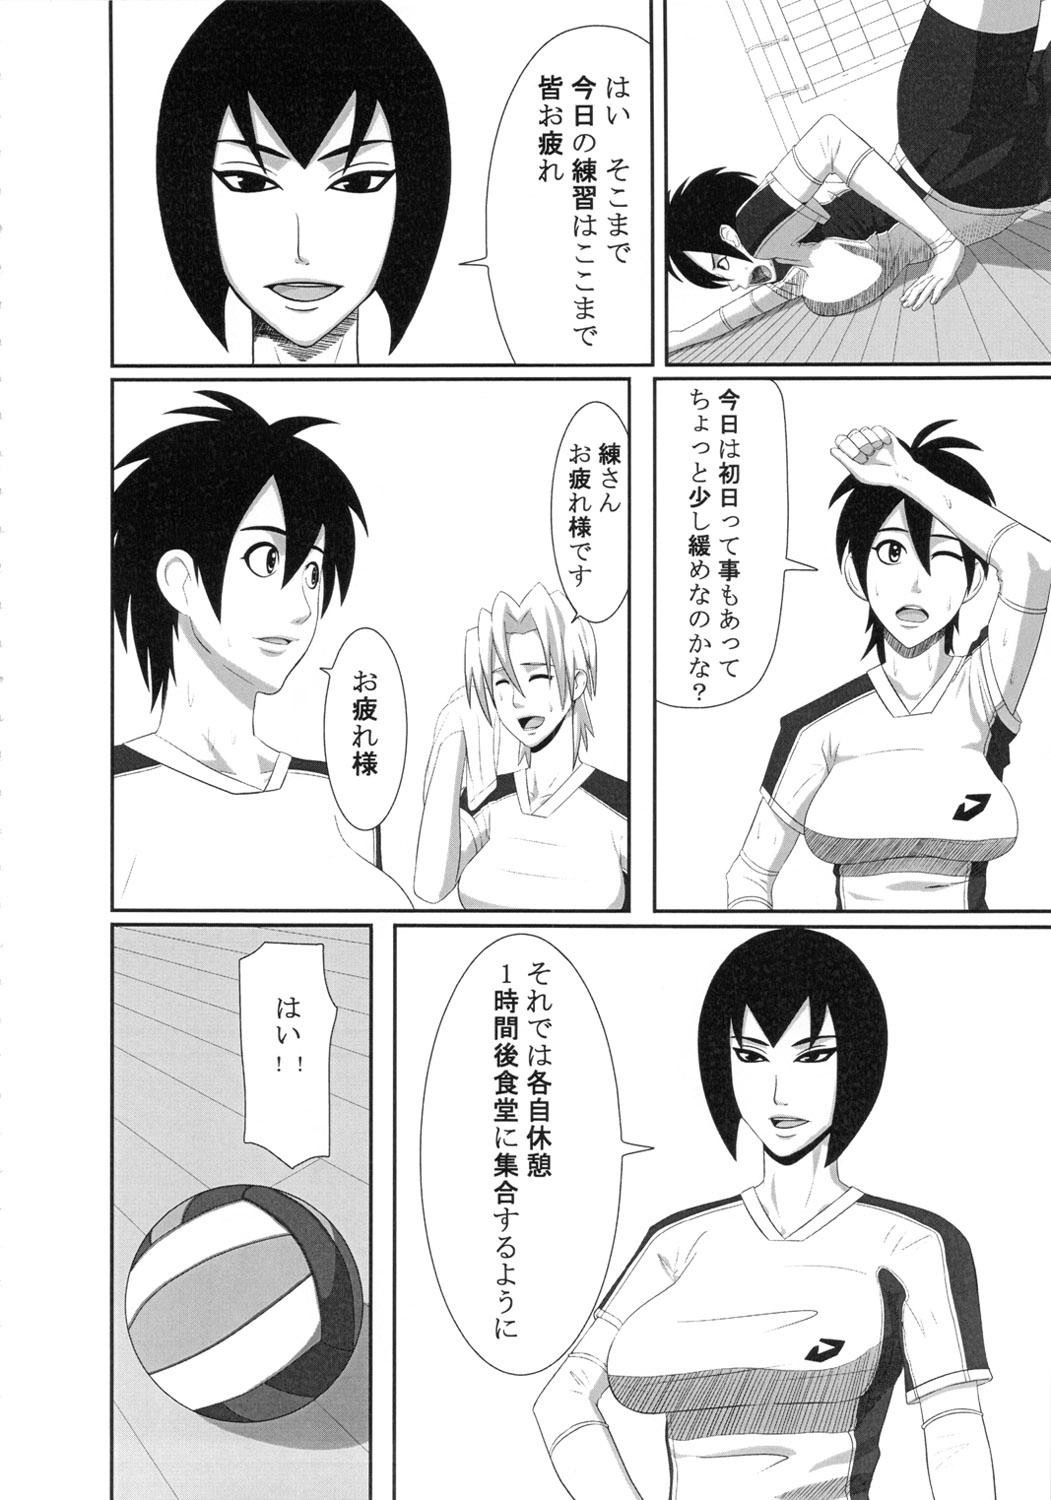 Nut redlevel - Shoujo fight Bathroom - Page 5